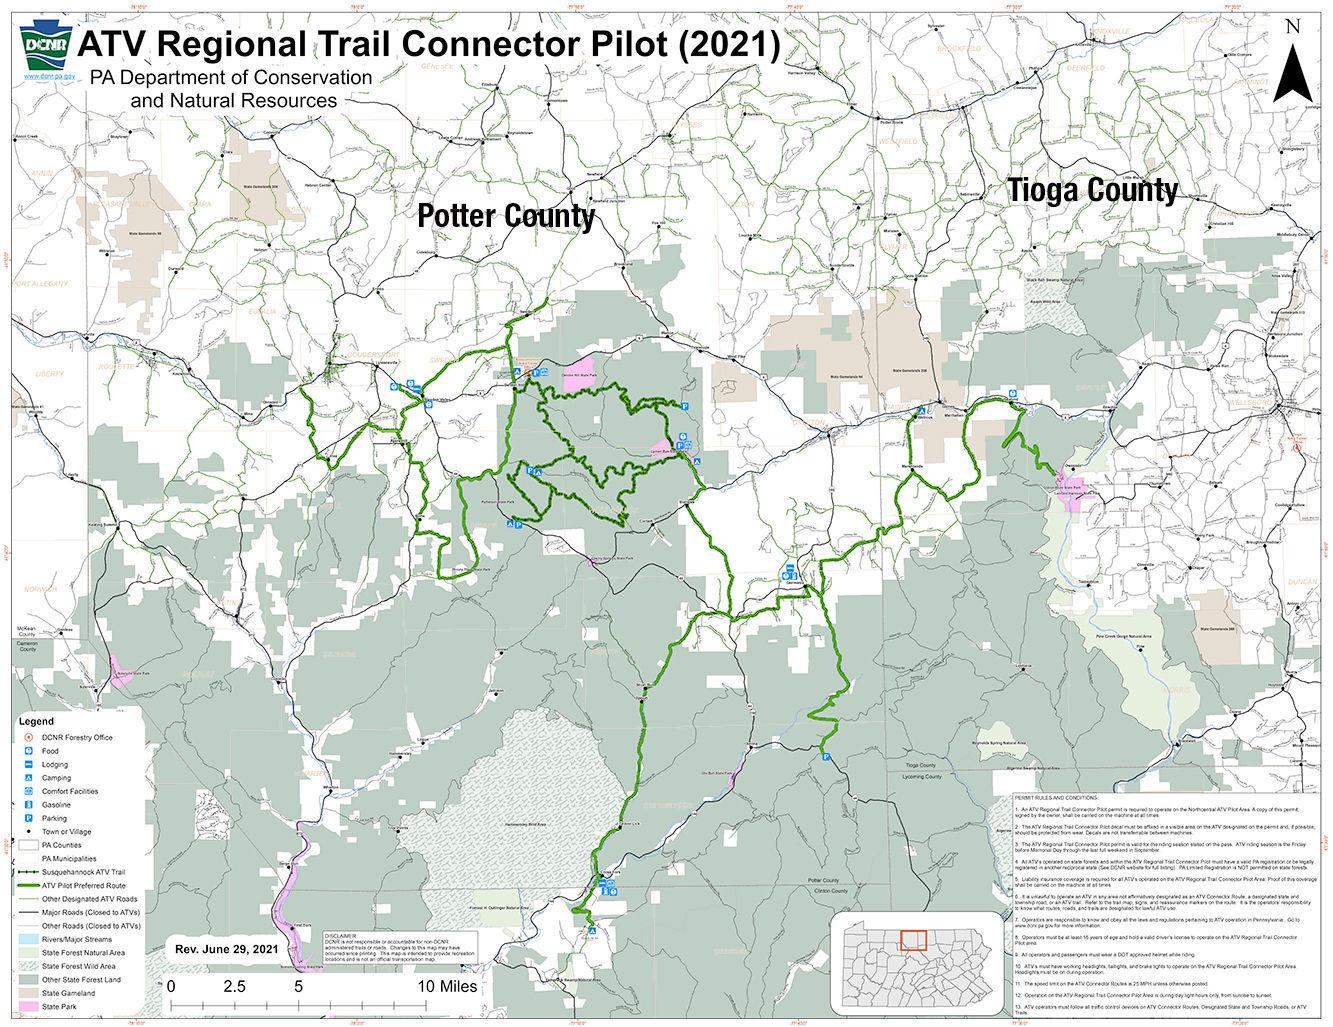 Pilot ATV trail connector program begins Community